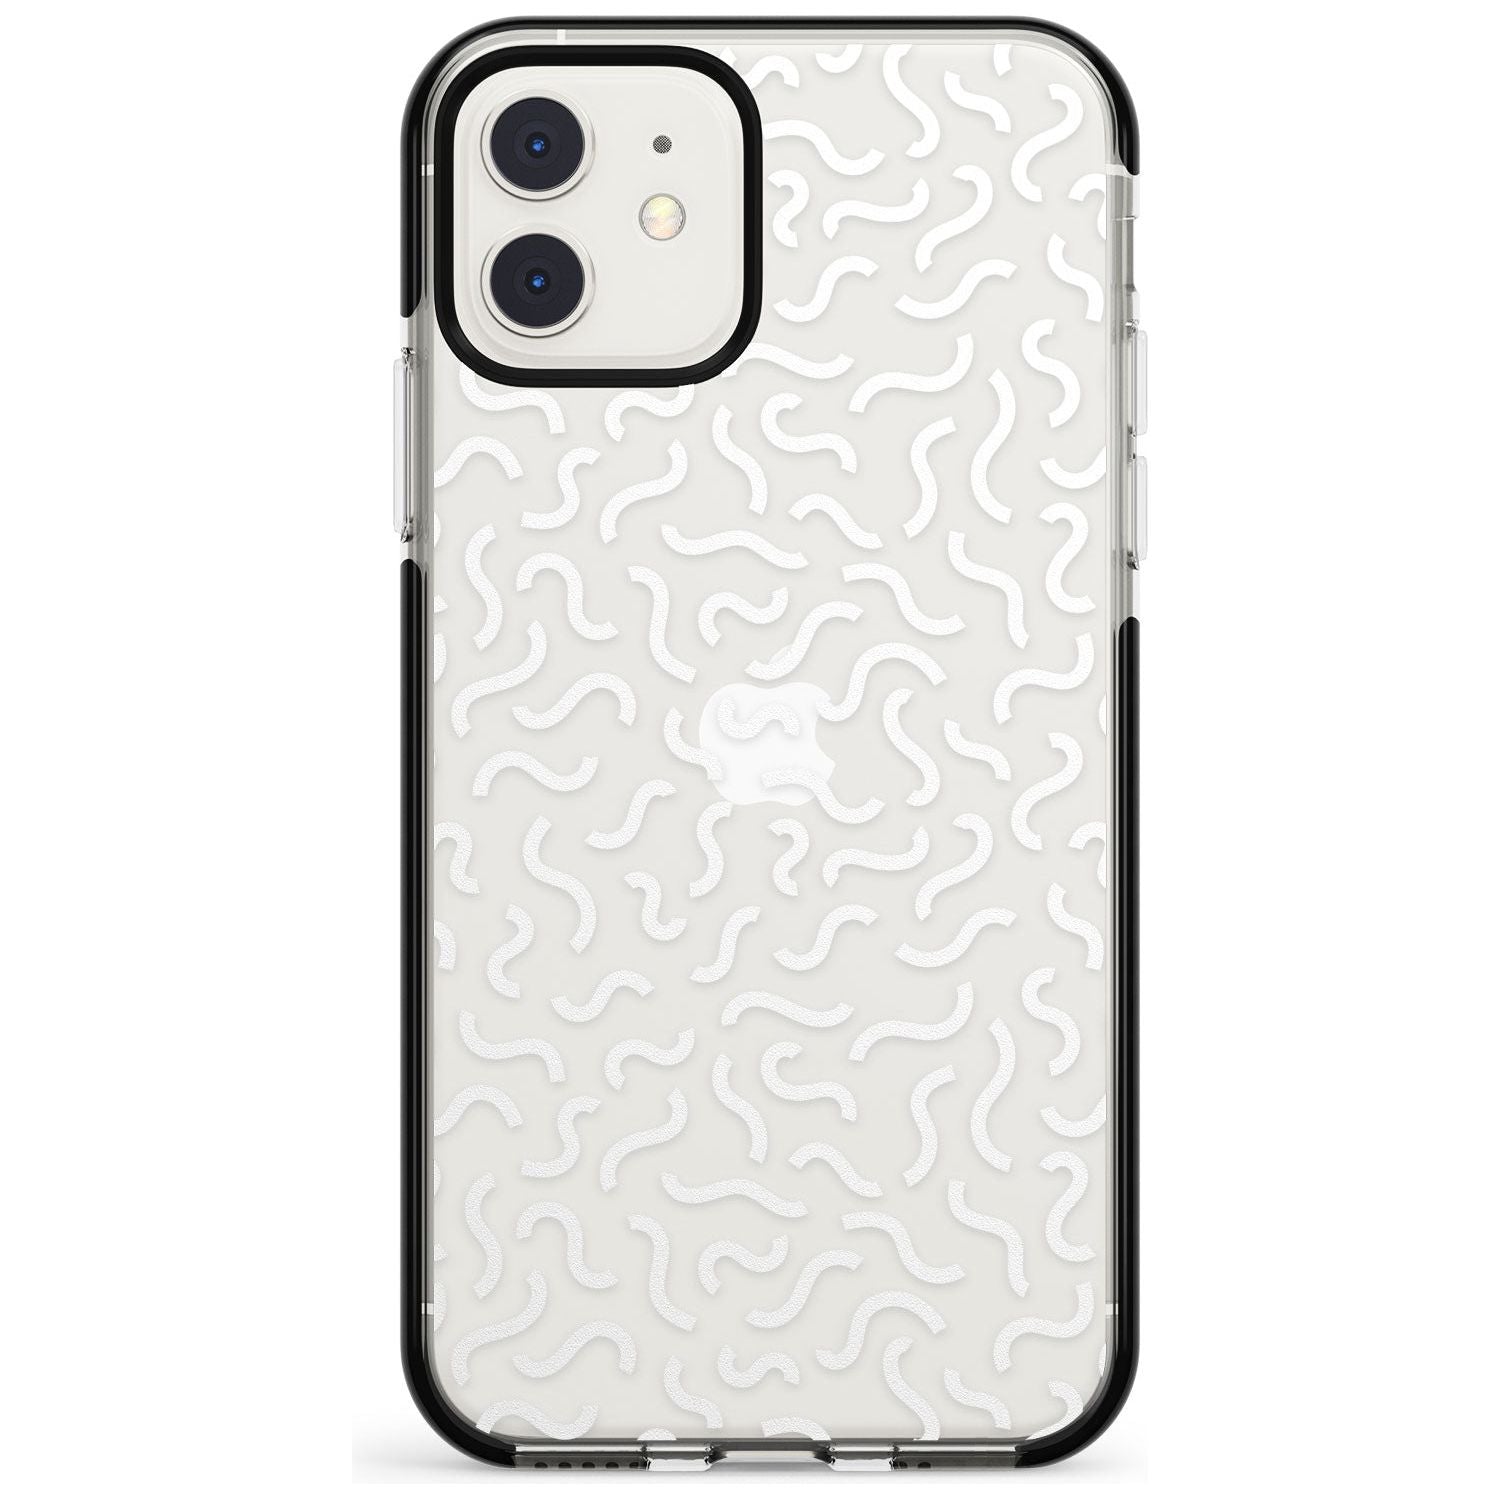 White Wavy Squiggles Memphis Retro Pattern Design Black Impact Phone Case for iPhone 11